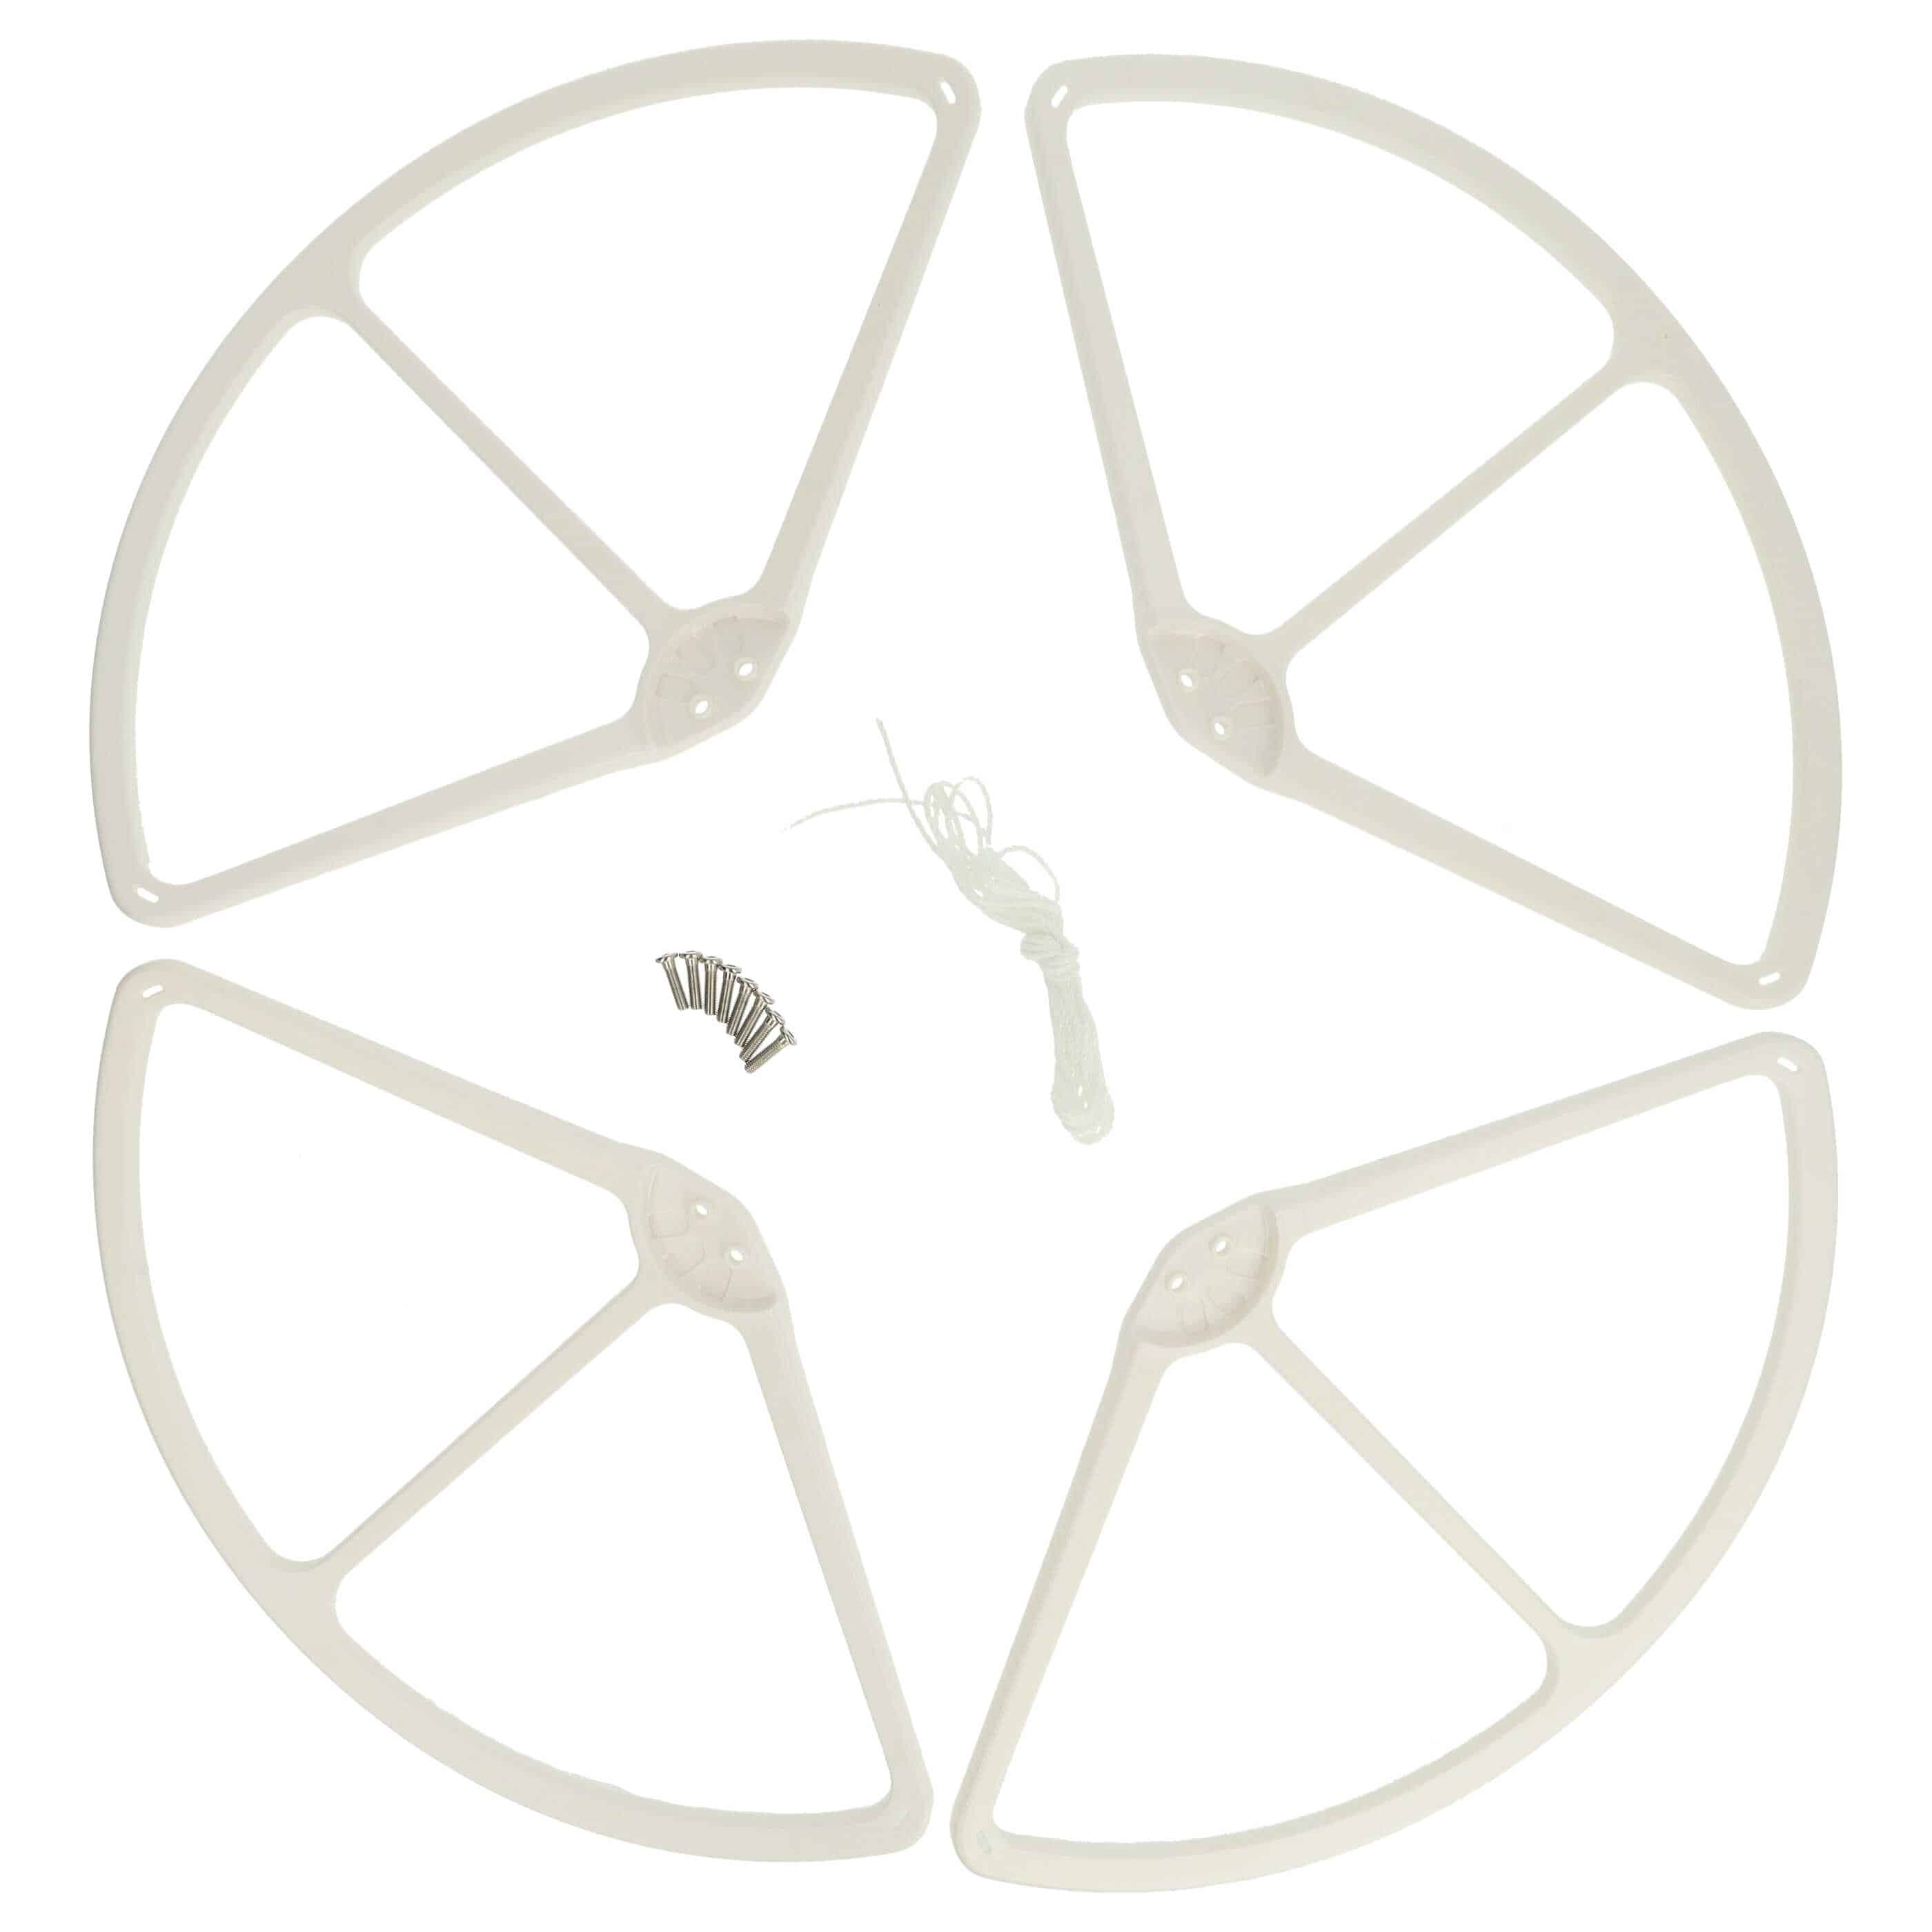 4x Protecteurs d'hélice pour drone DJI Phantom 3 Advanced - blanc